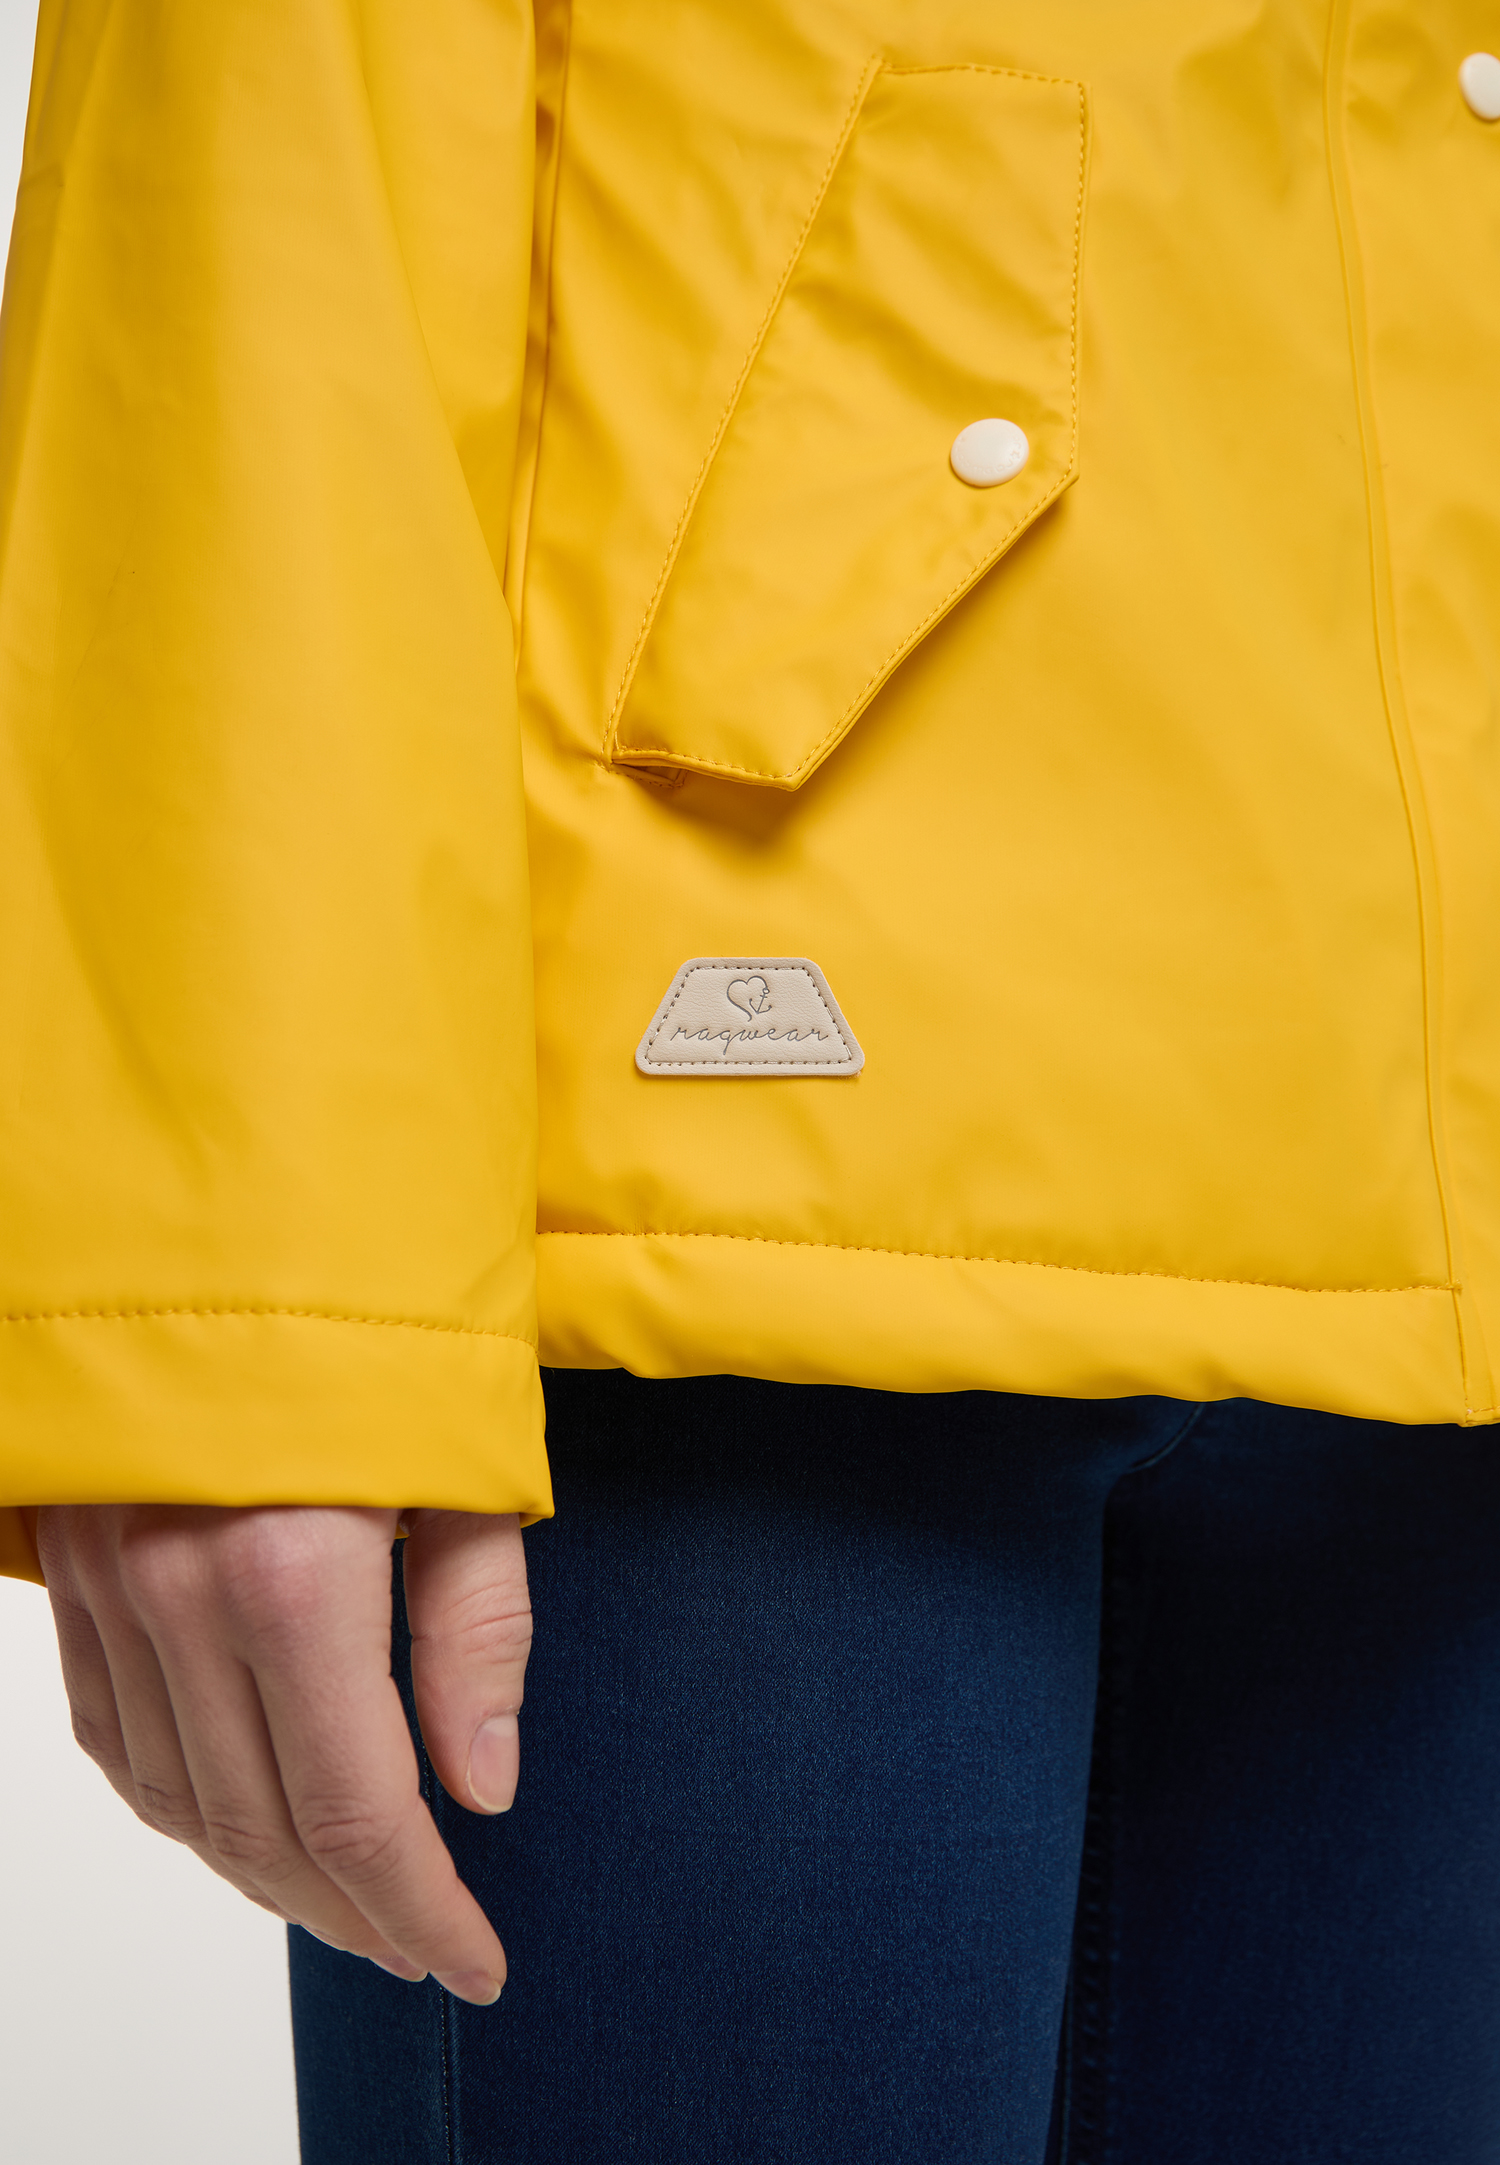 Top to | jackets this ragwear | season! rain Stylish Magazine wear